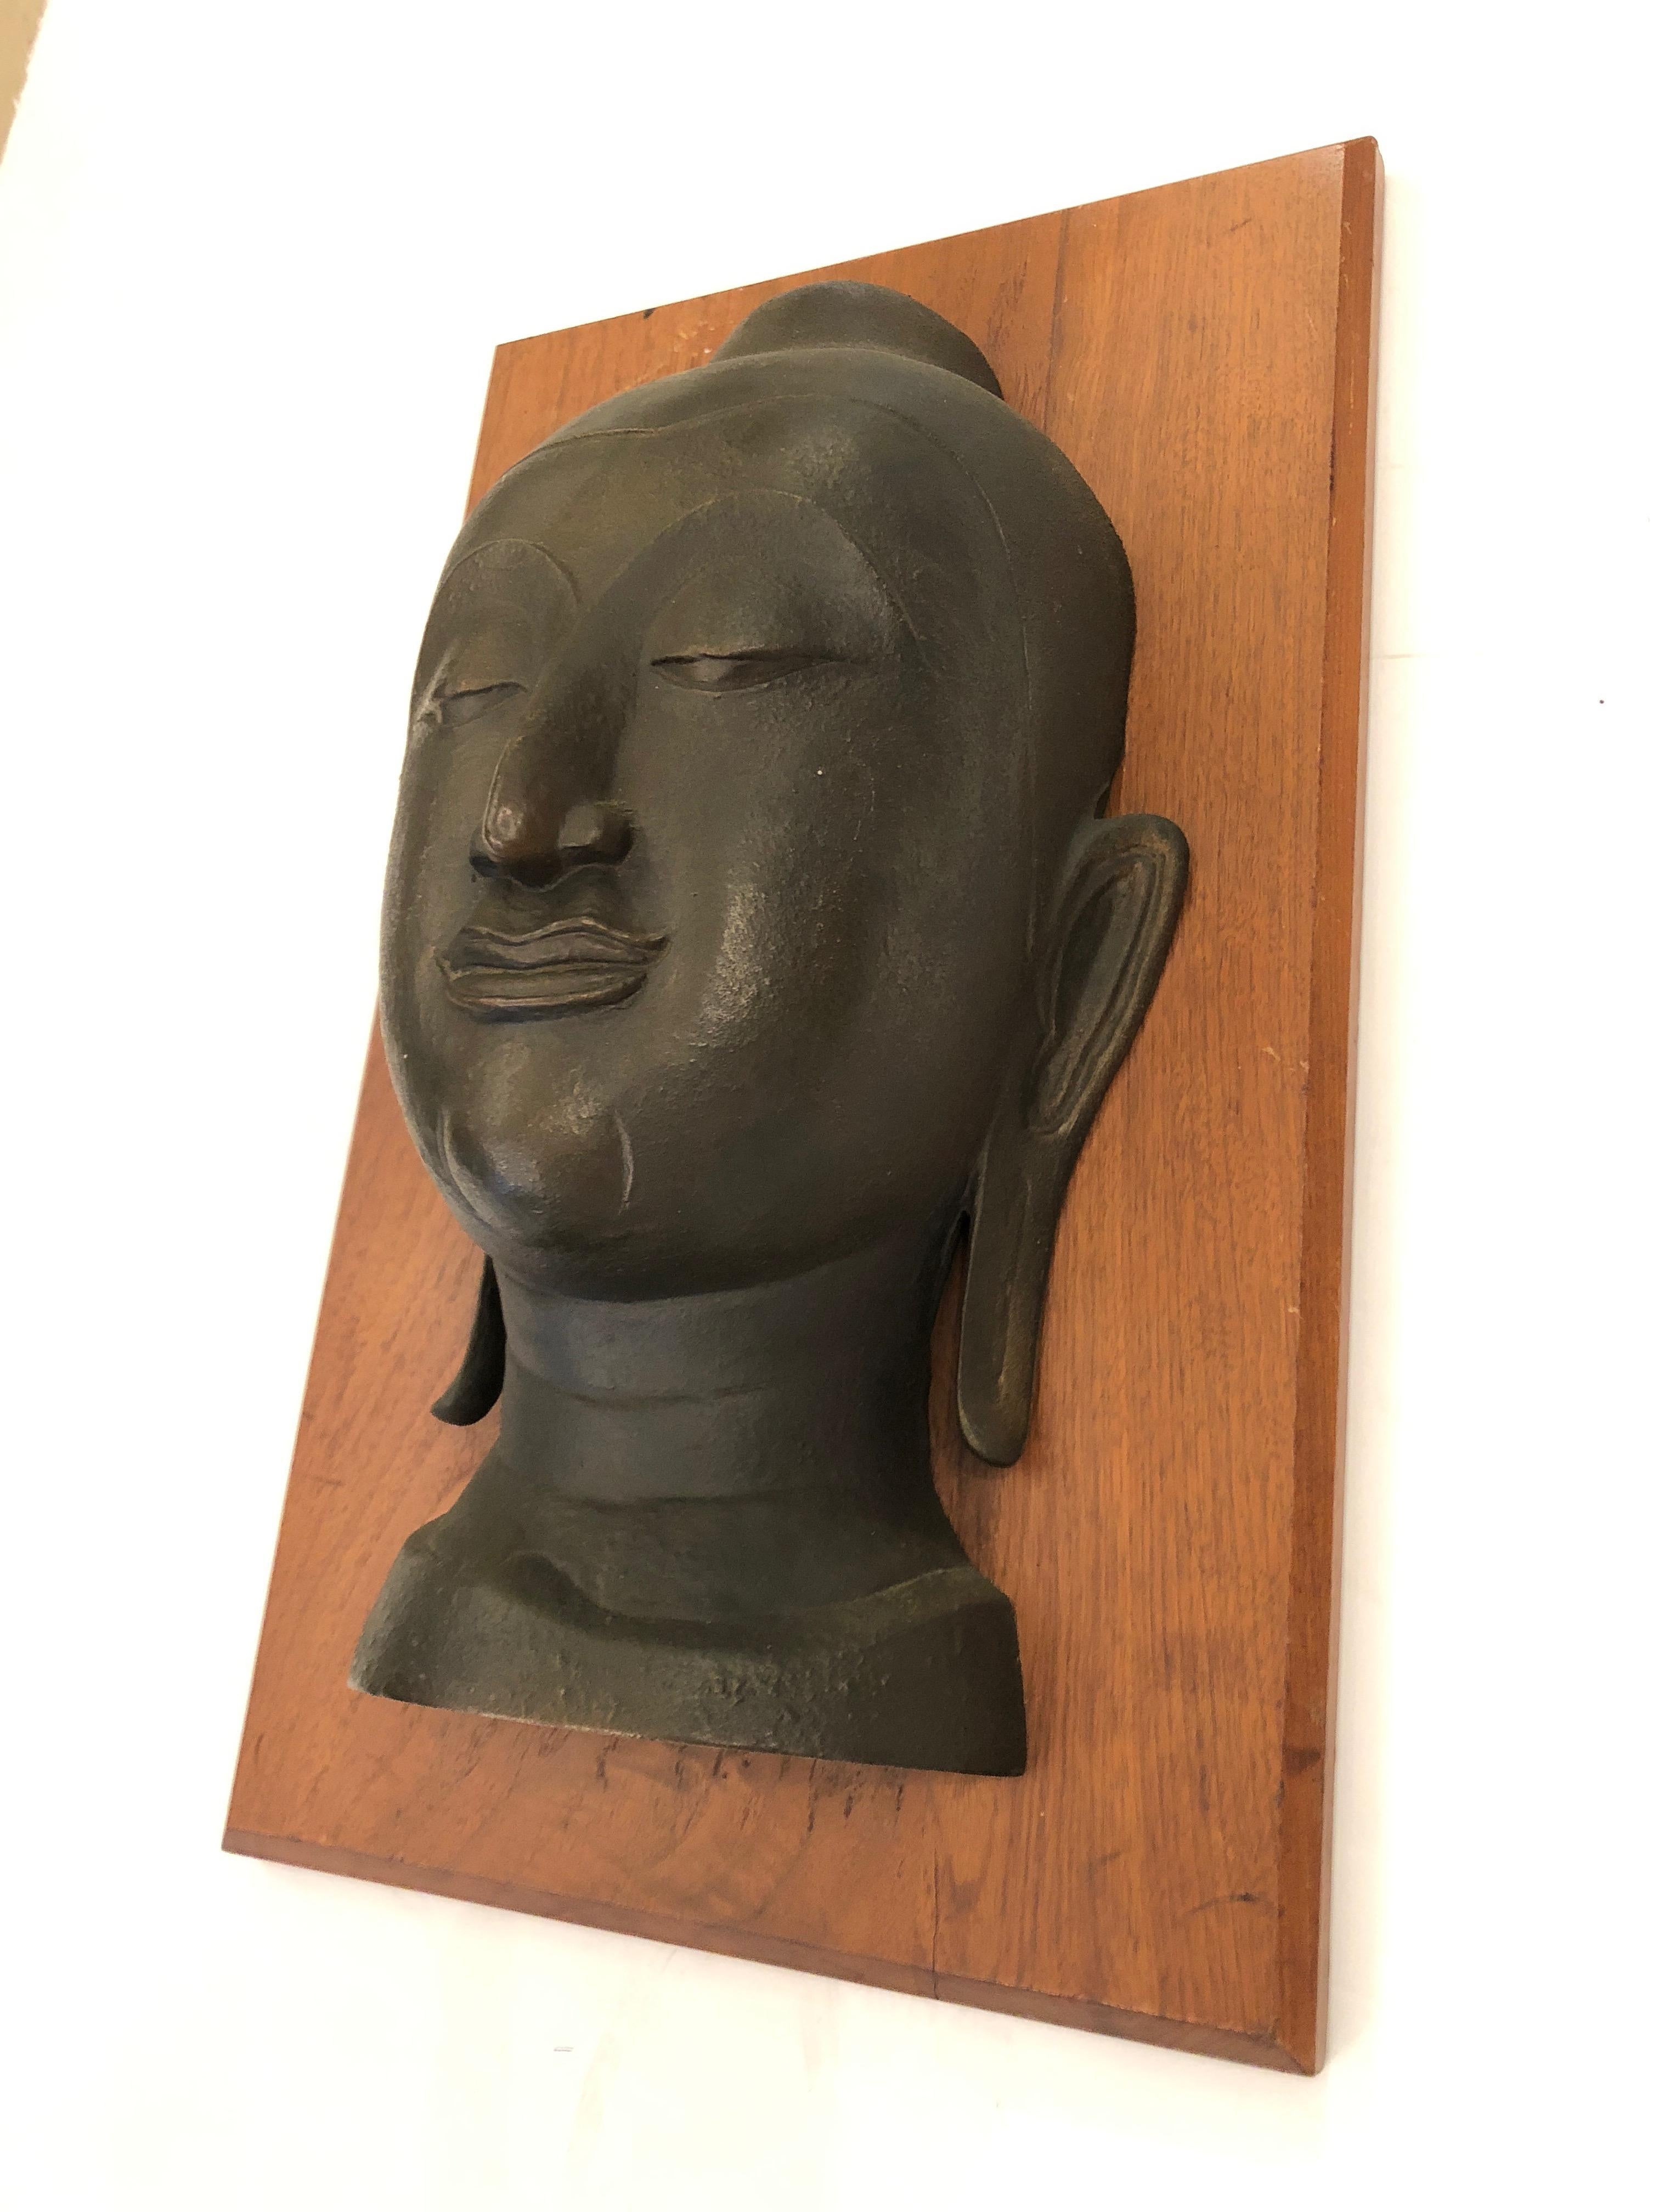 A striking wall sculpture having a serene bronze Buddha head mounted on handsome walnut board.